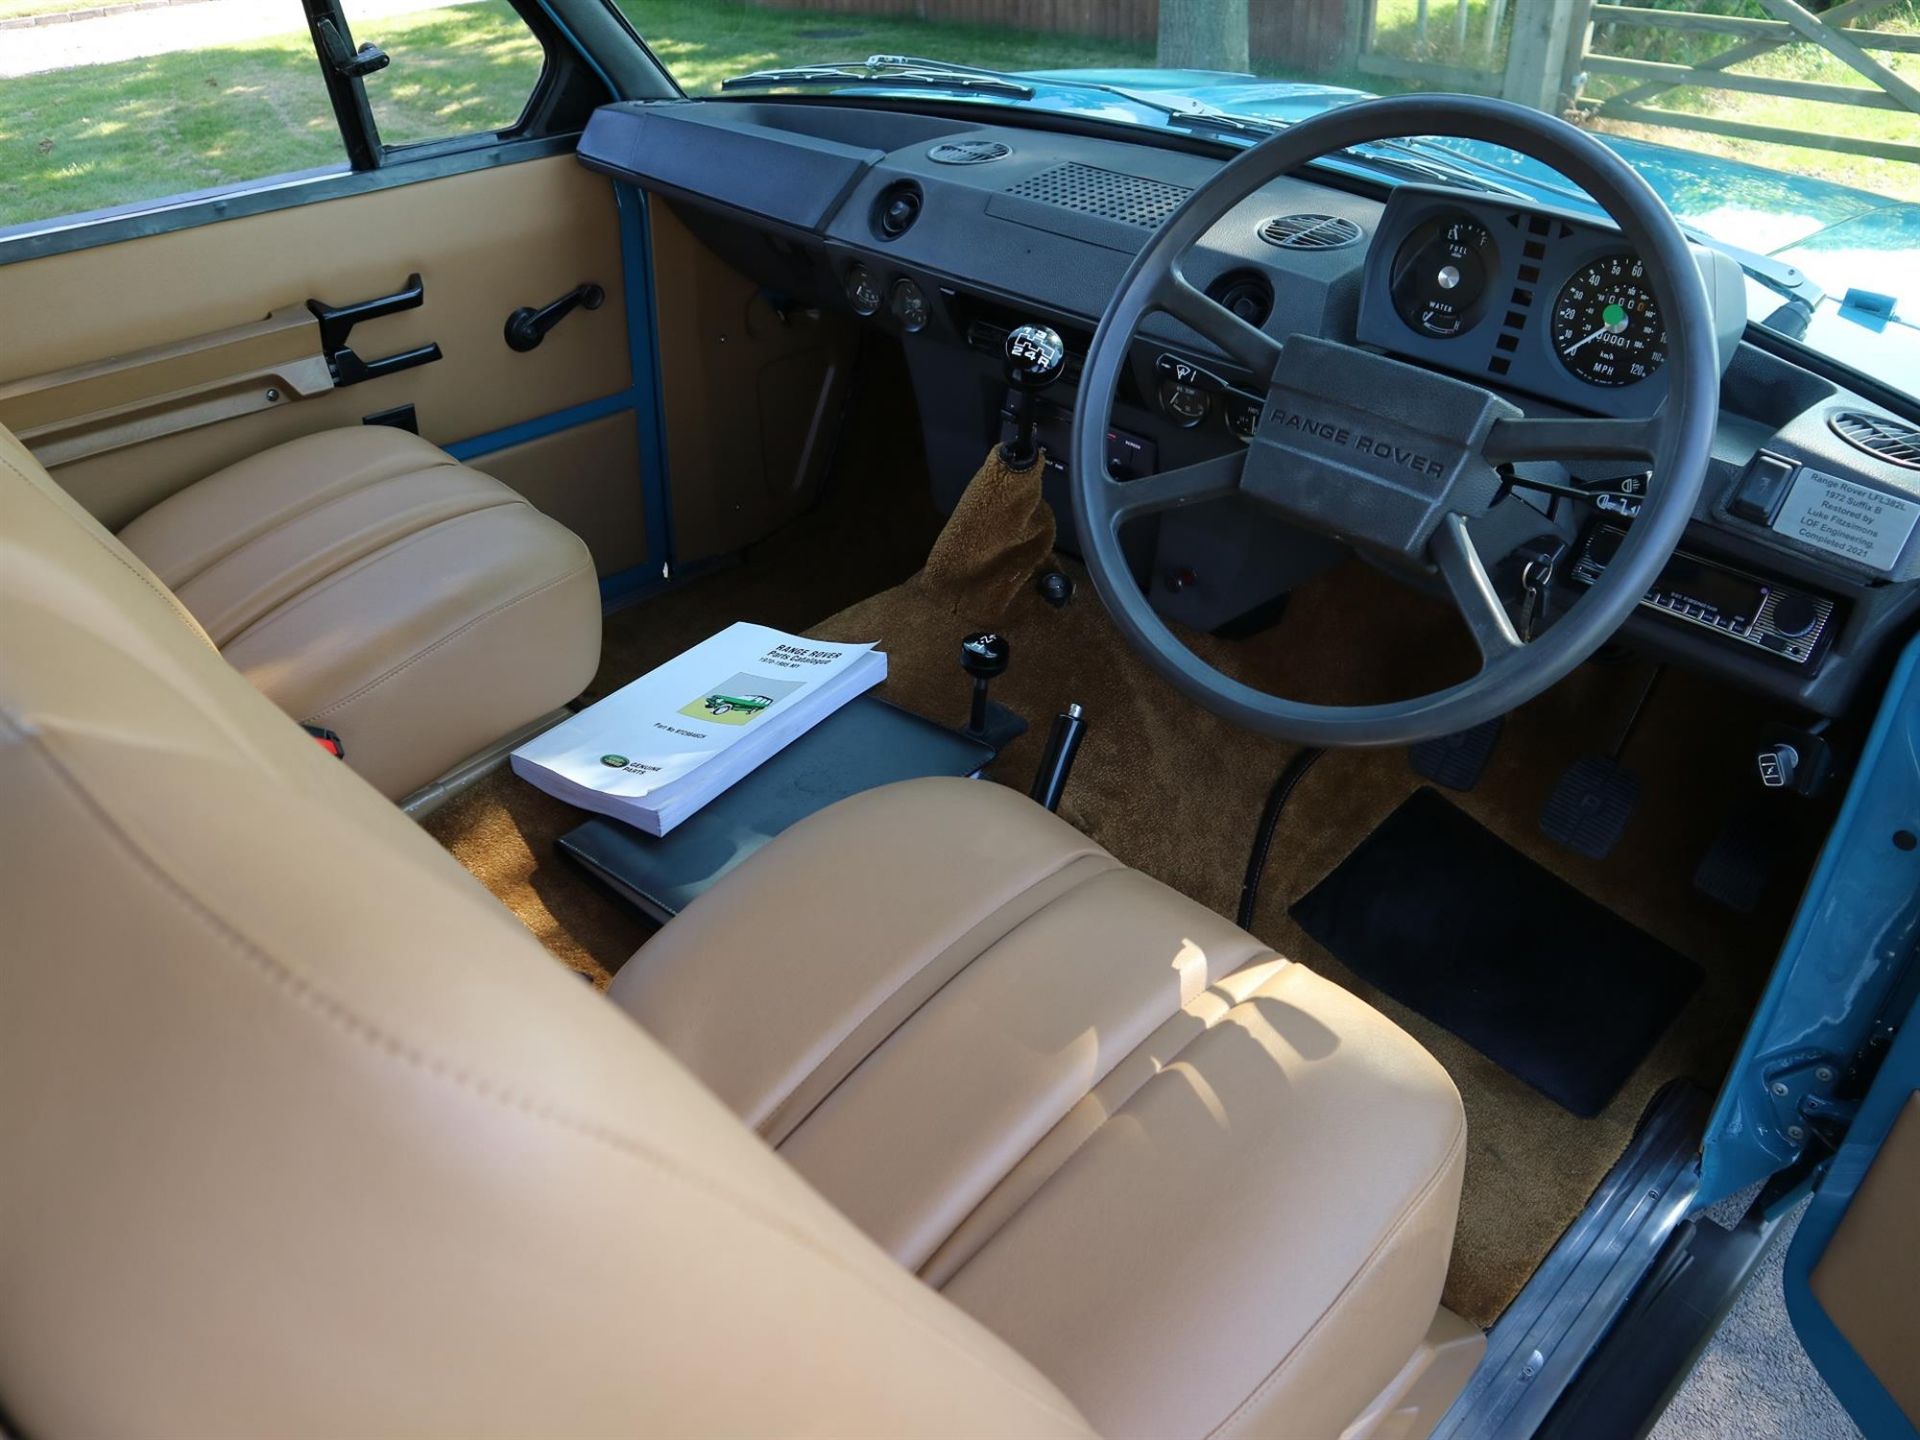 1972 Range Rover 3-Door Suffix B - Fully Restored - Image 9 of 10